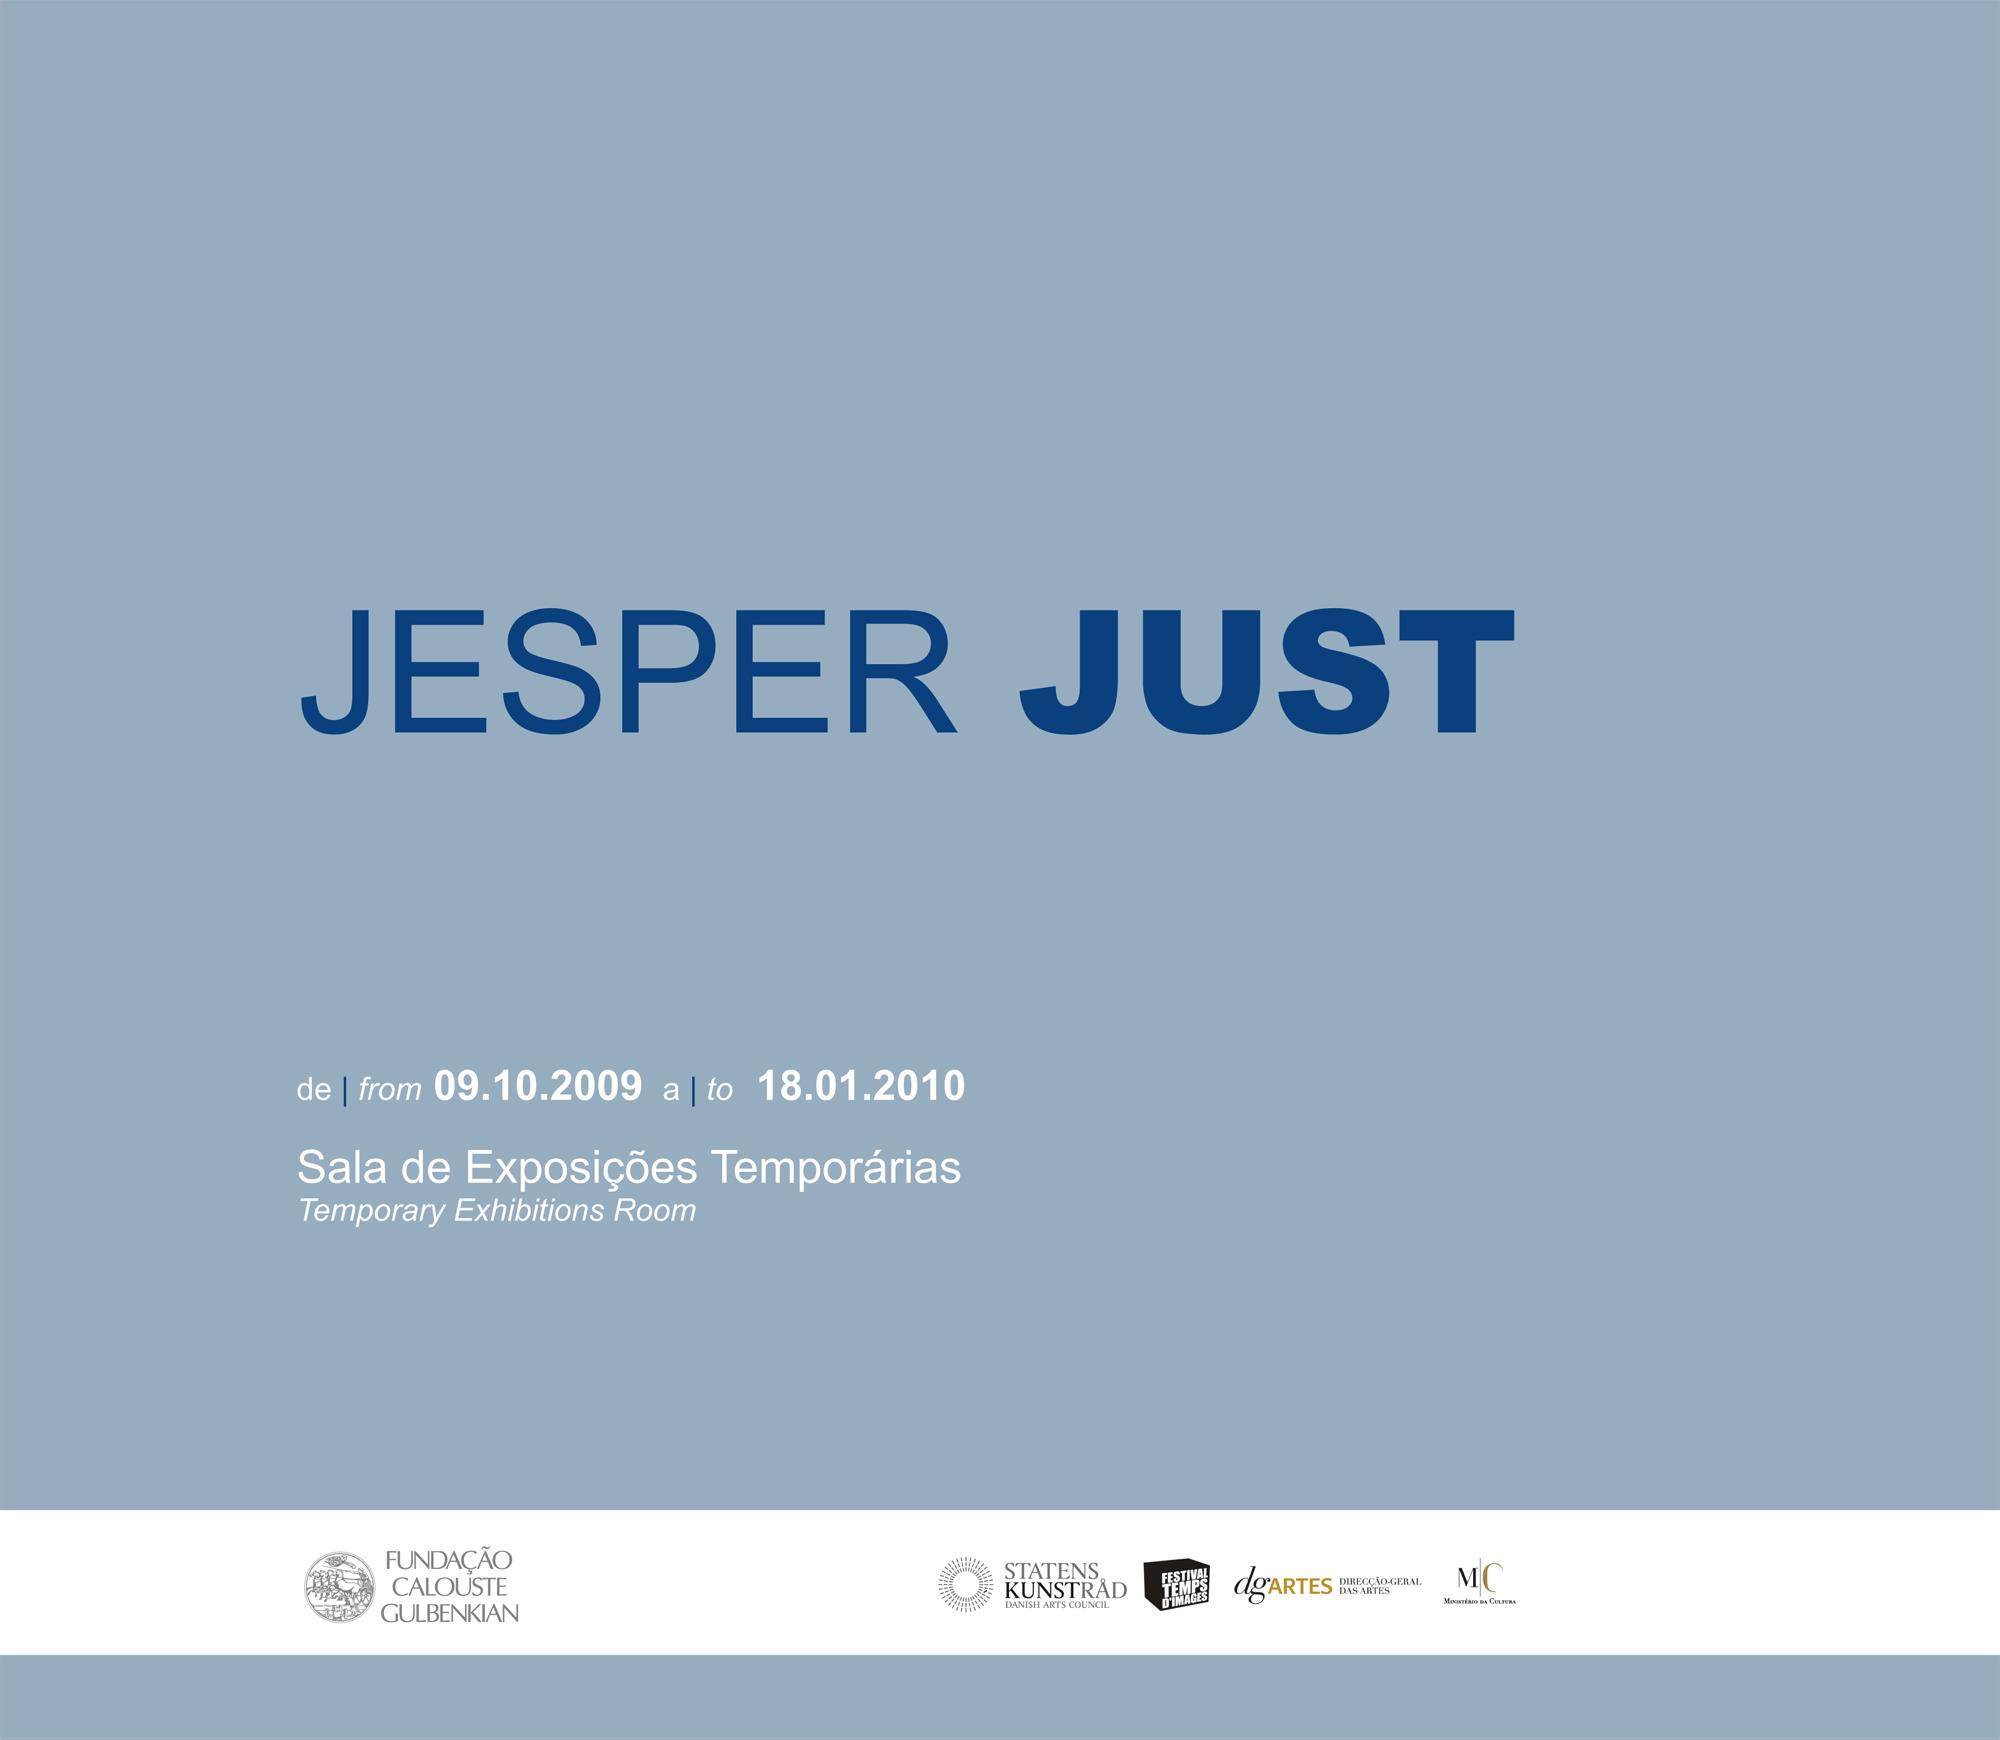 Jesper Just